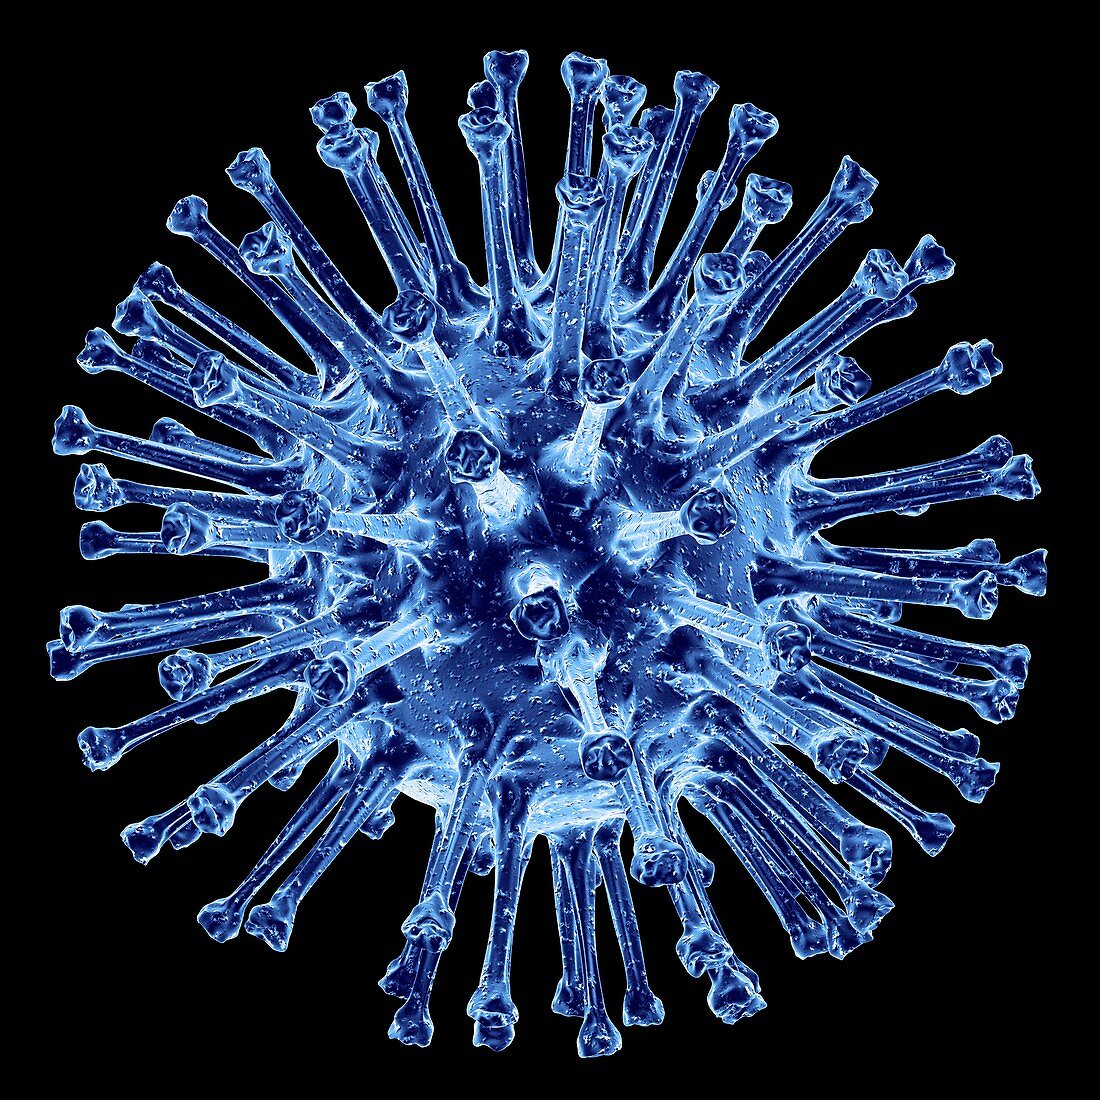 H1N1 flu virus particle,artwork